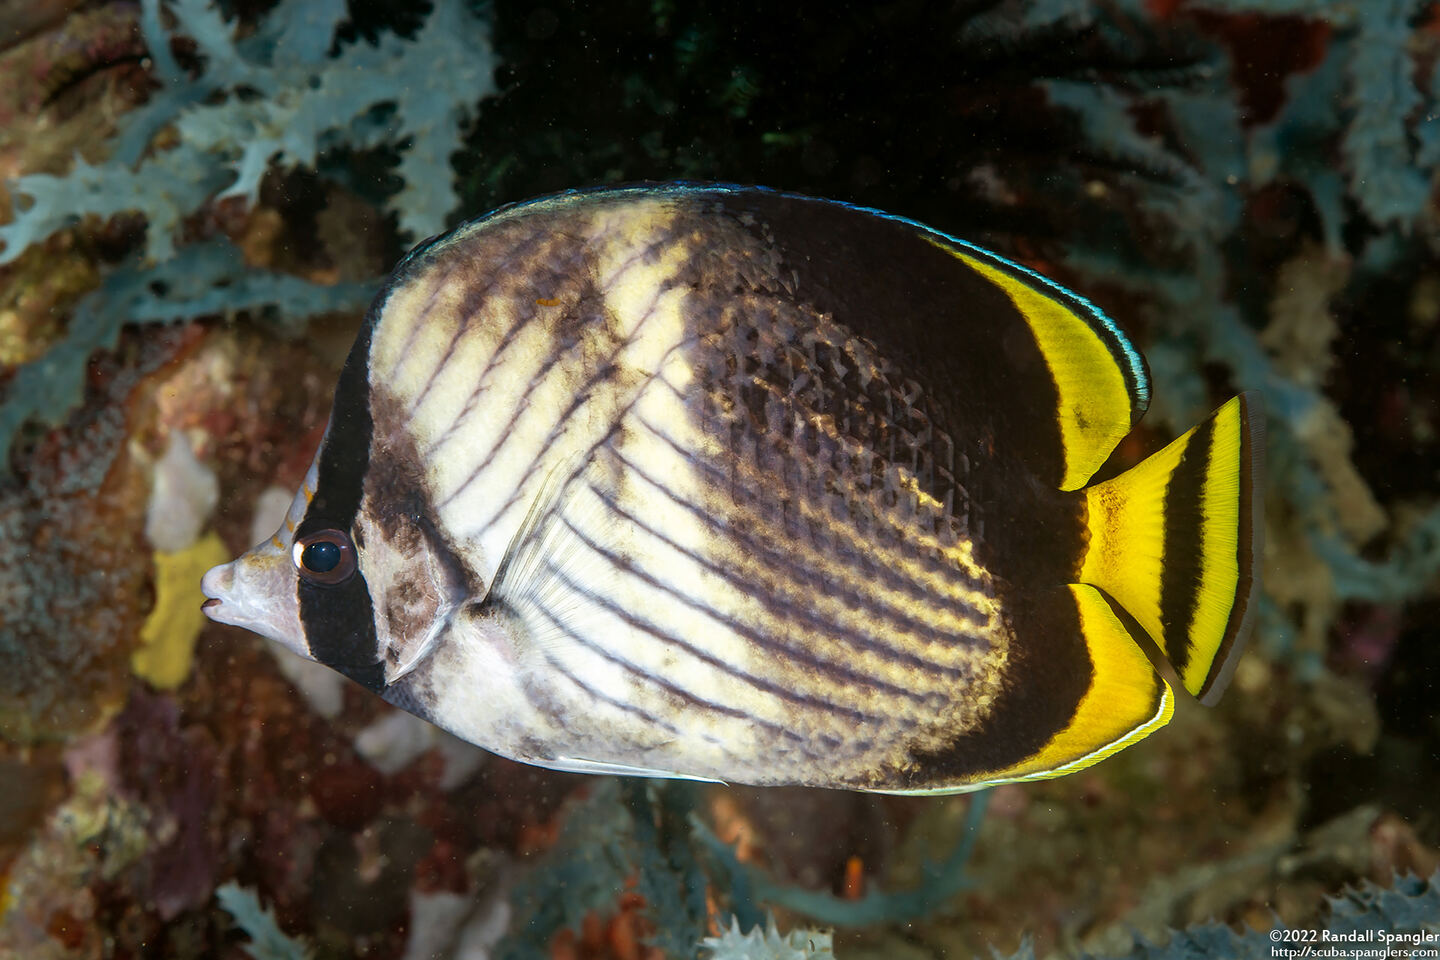 Chaetodon vagabundus (Vagabond Butterflyfish); Likely hybrid with another butterflyfish species